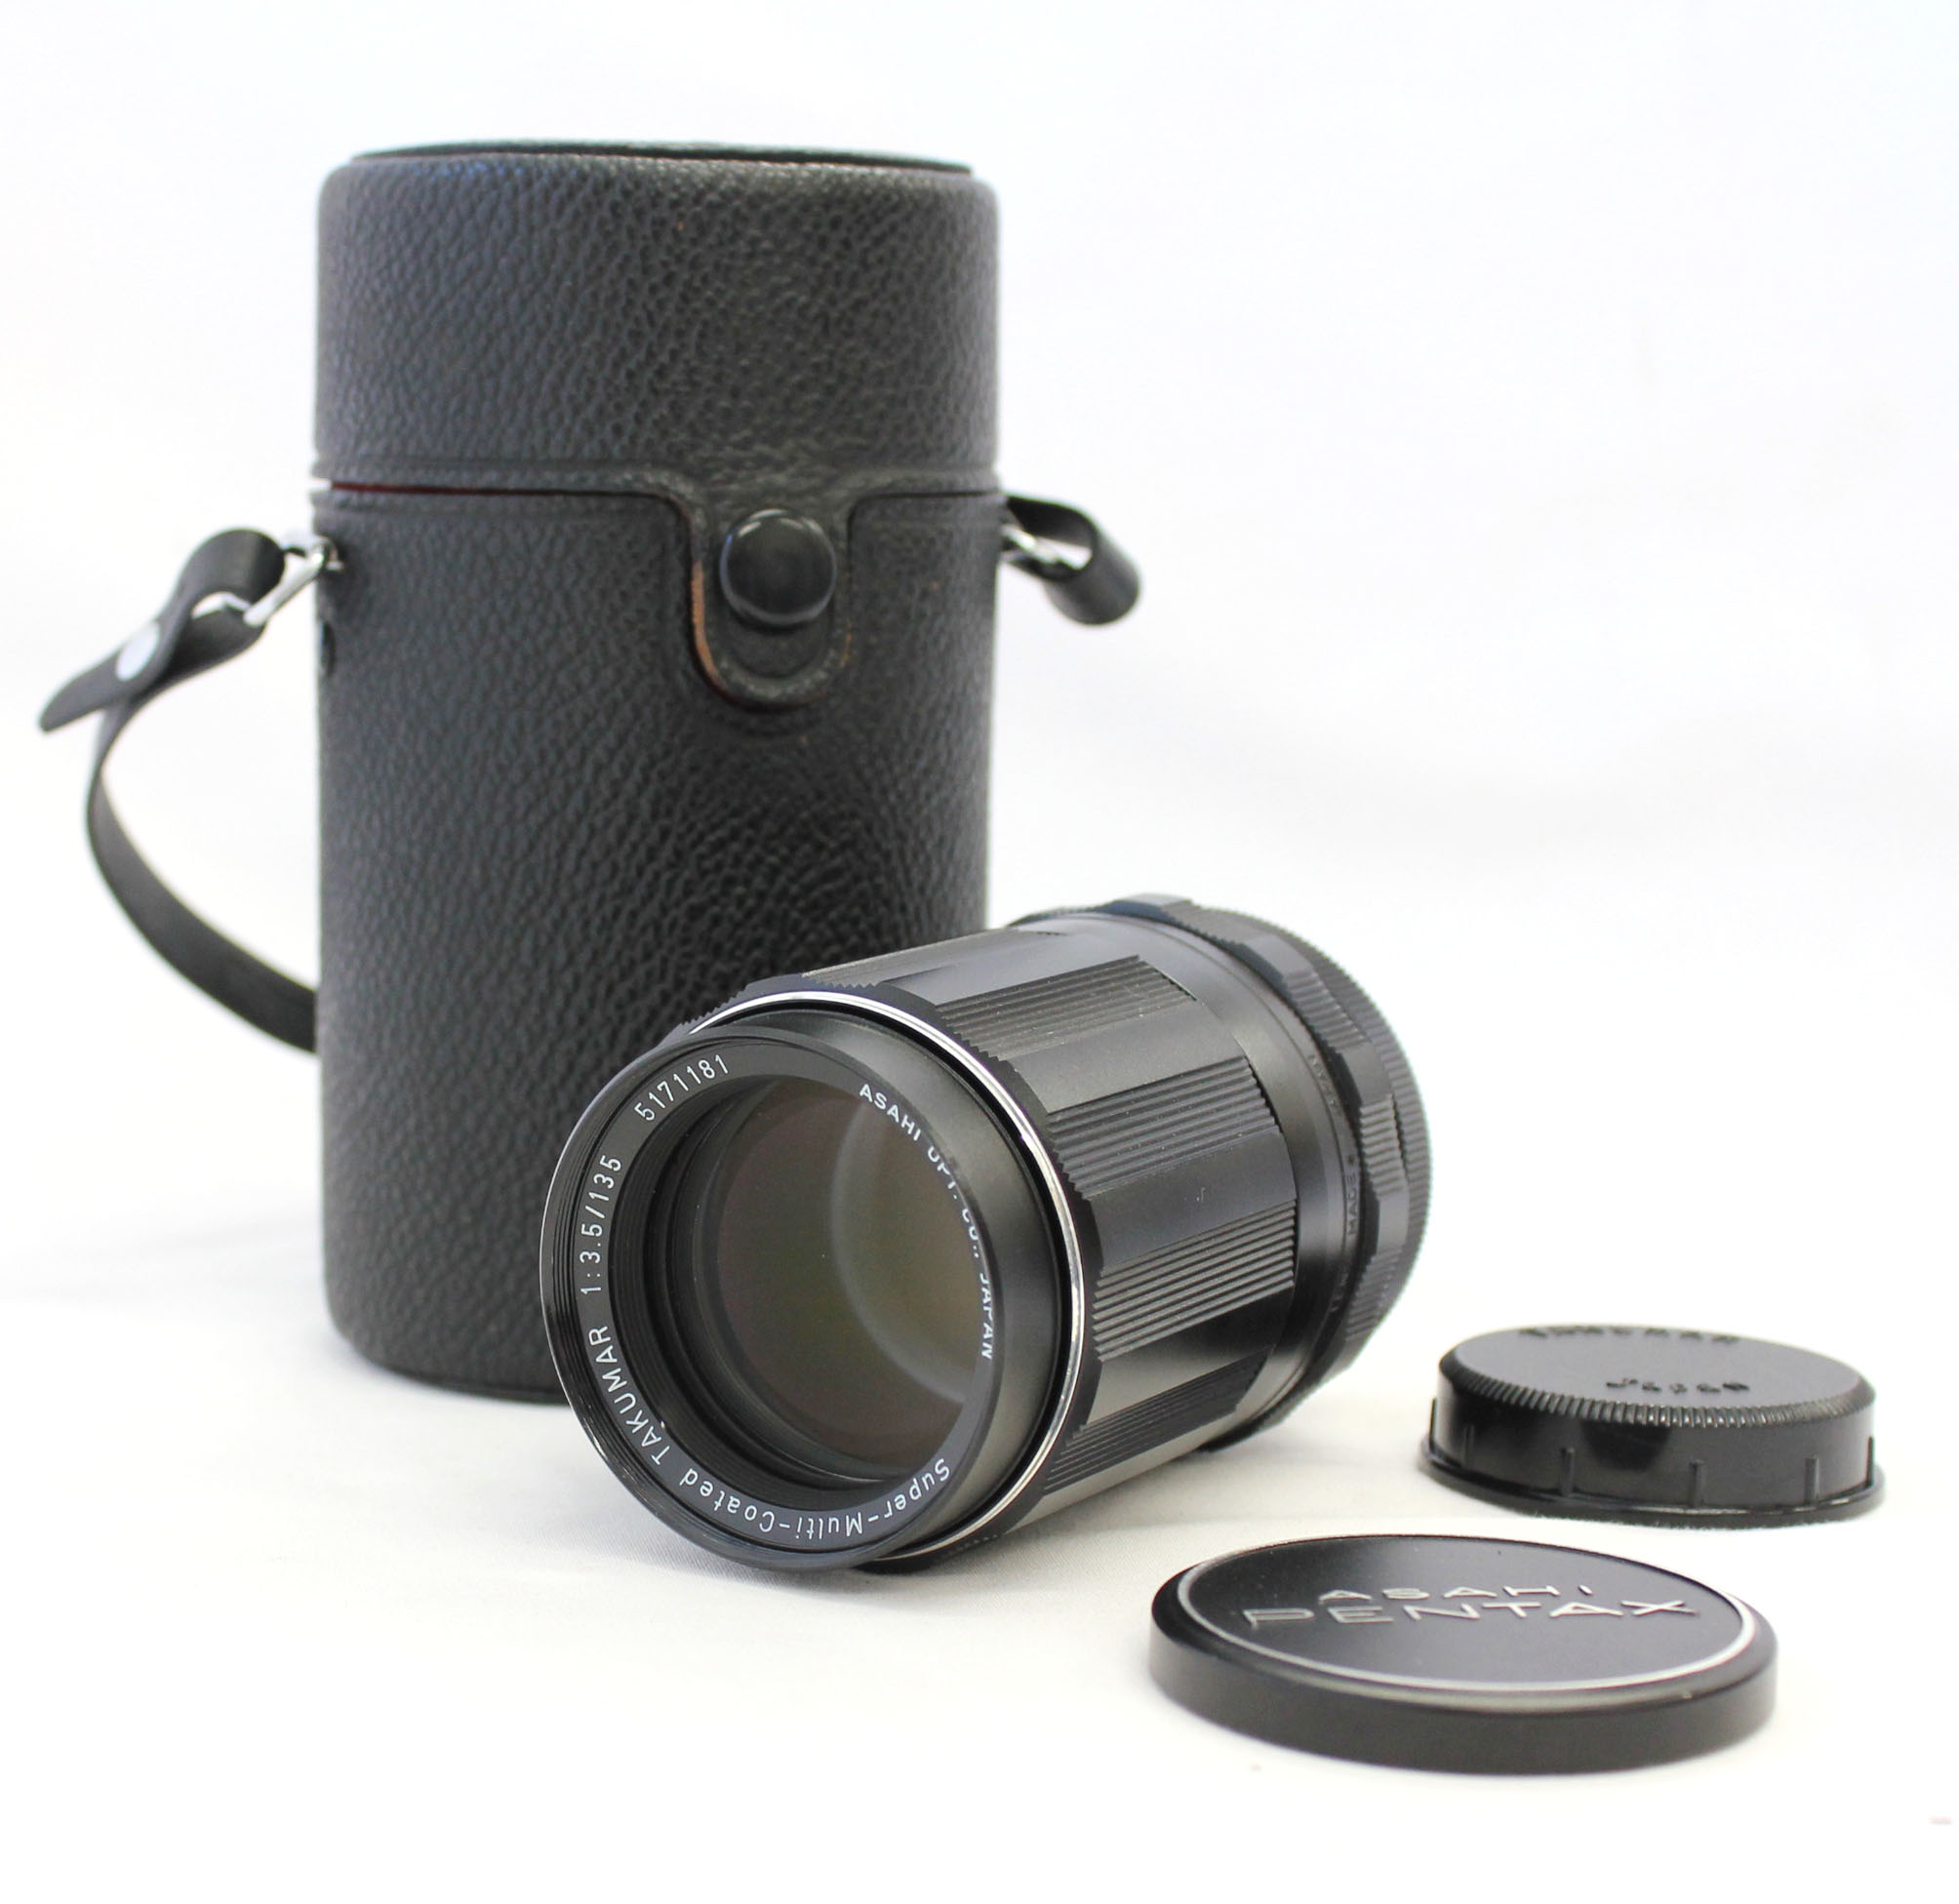 Japan Used Camera Shop | [Near Mint] Asahi Pentax Super-Multi-Coated Takumar 135mm F/3.5 M42 Lens with Case from Japan